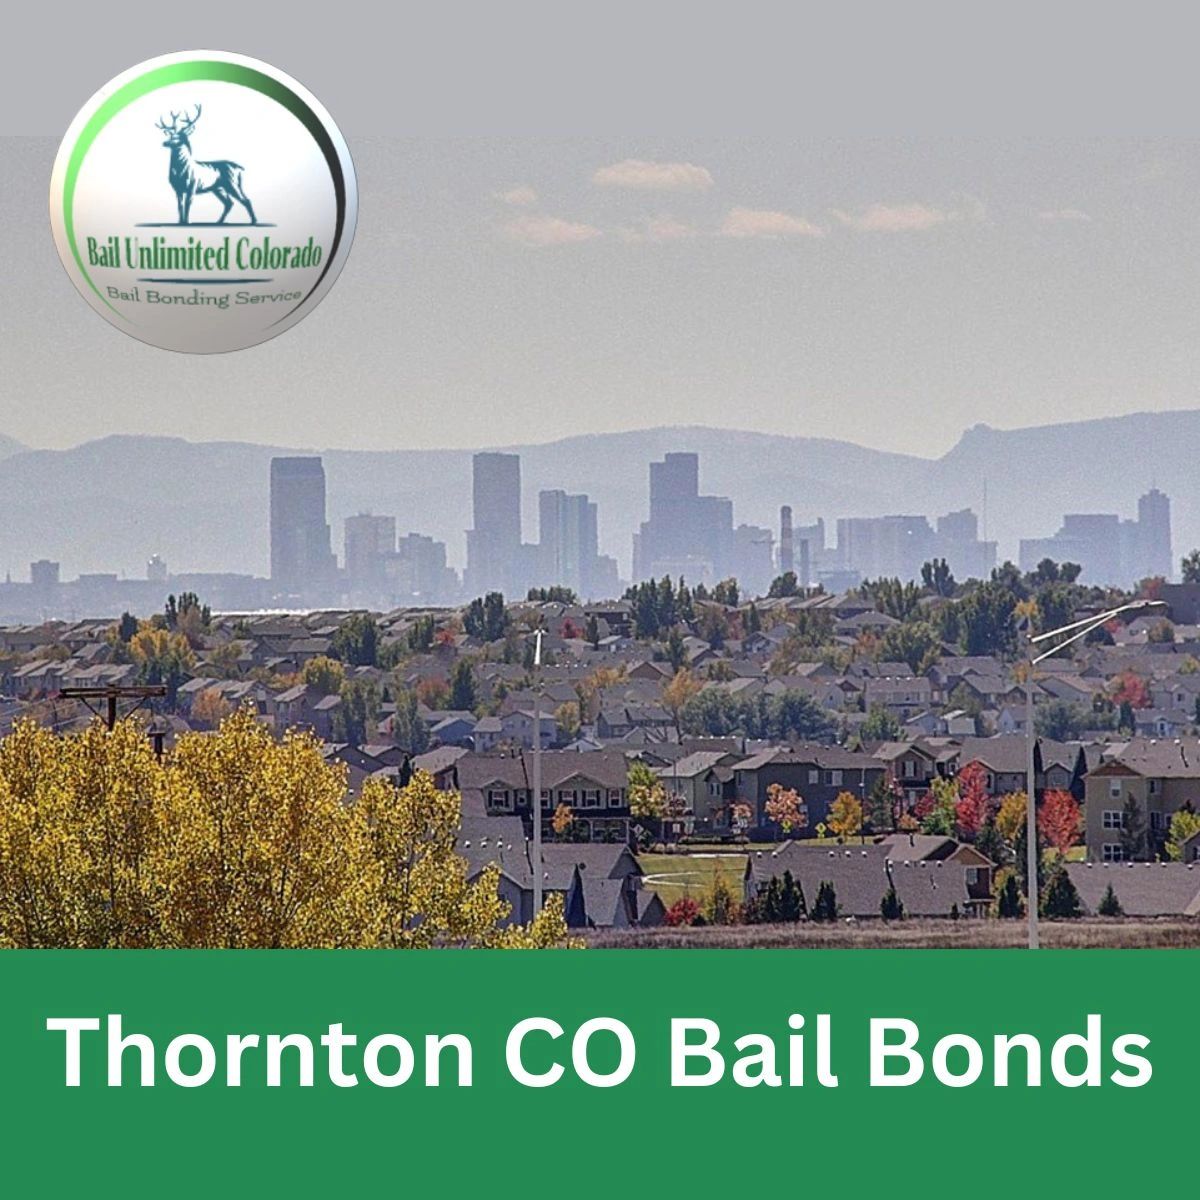 Thornton CO Bail Bonds LOGO Bail Unlimited Colorado IMAGE Thornton City 39.86804, -104.97192 Jail CO